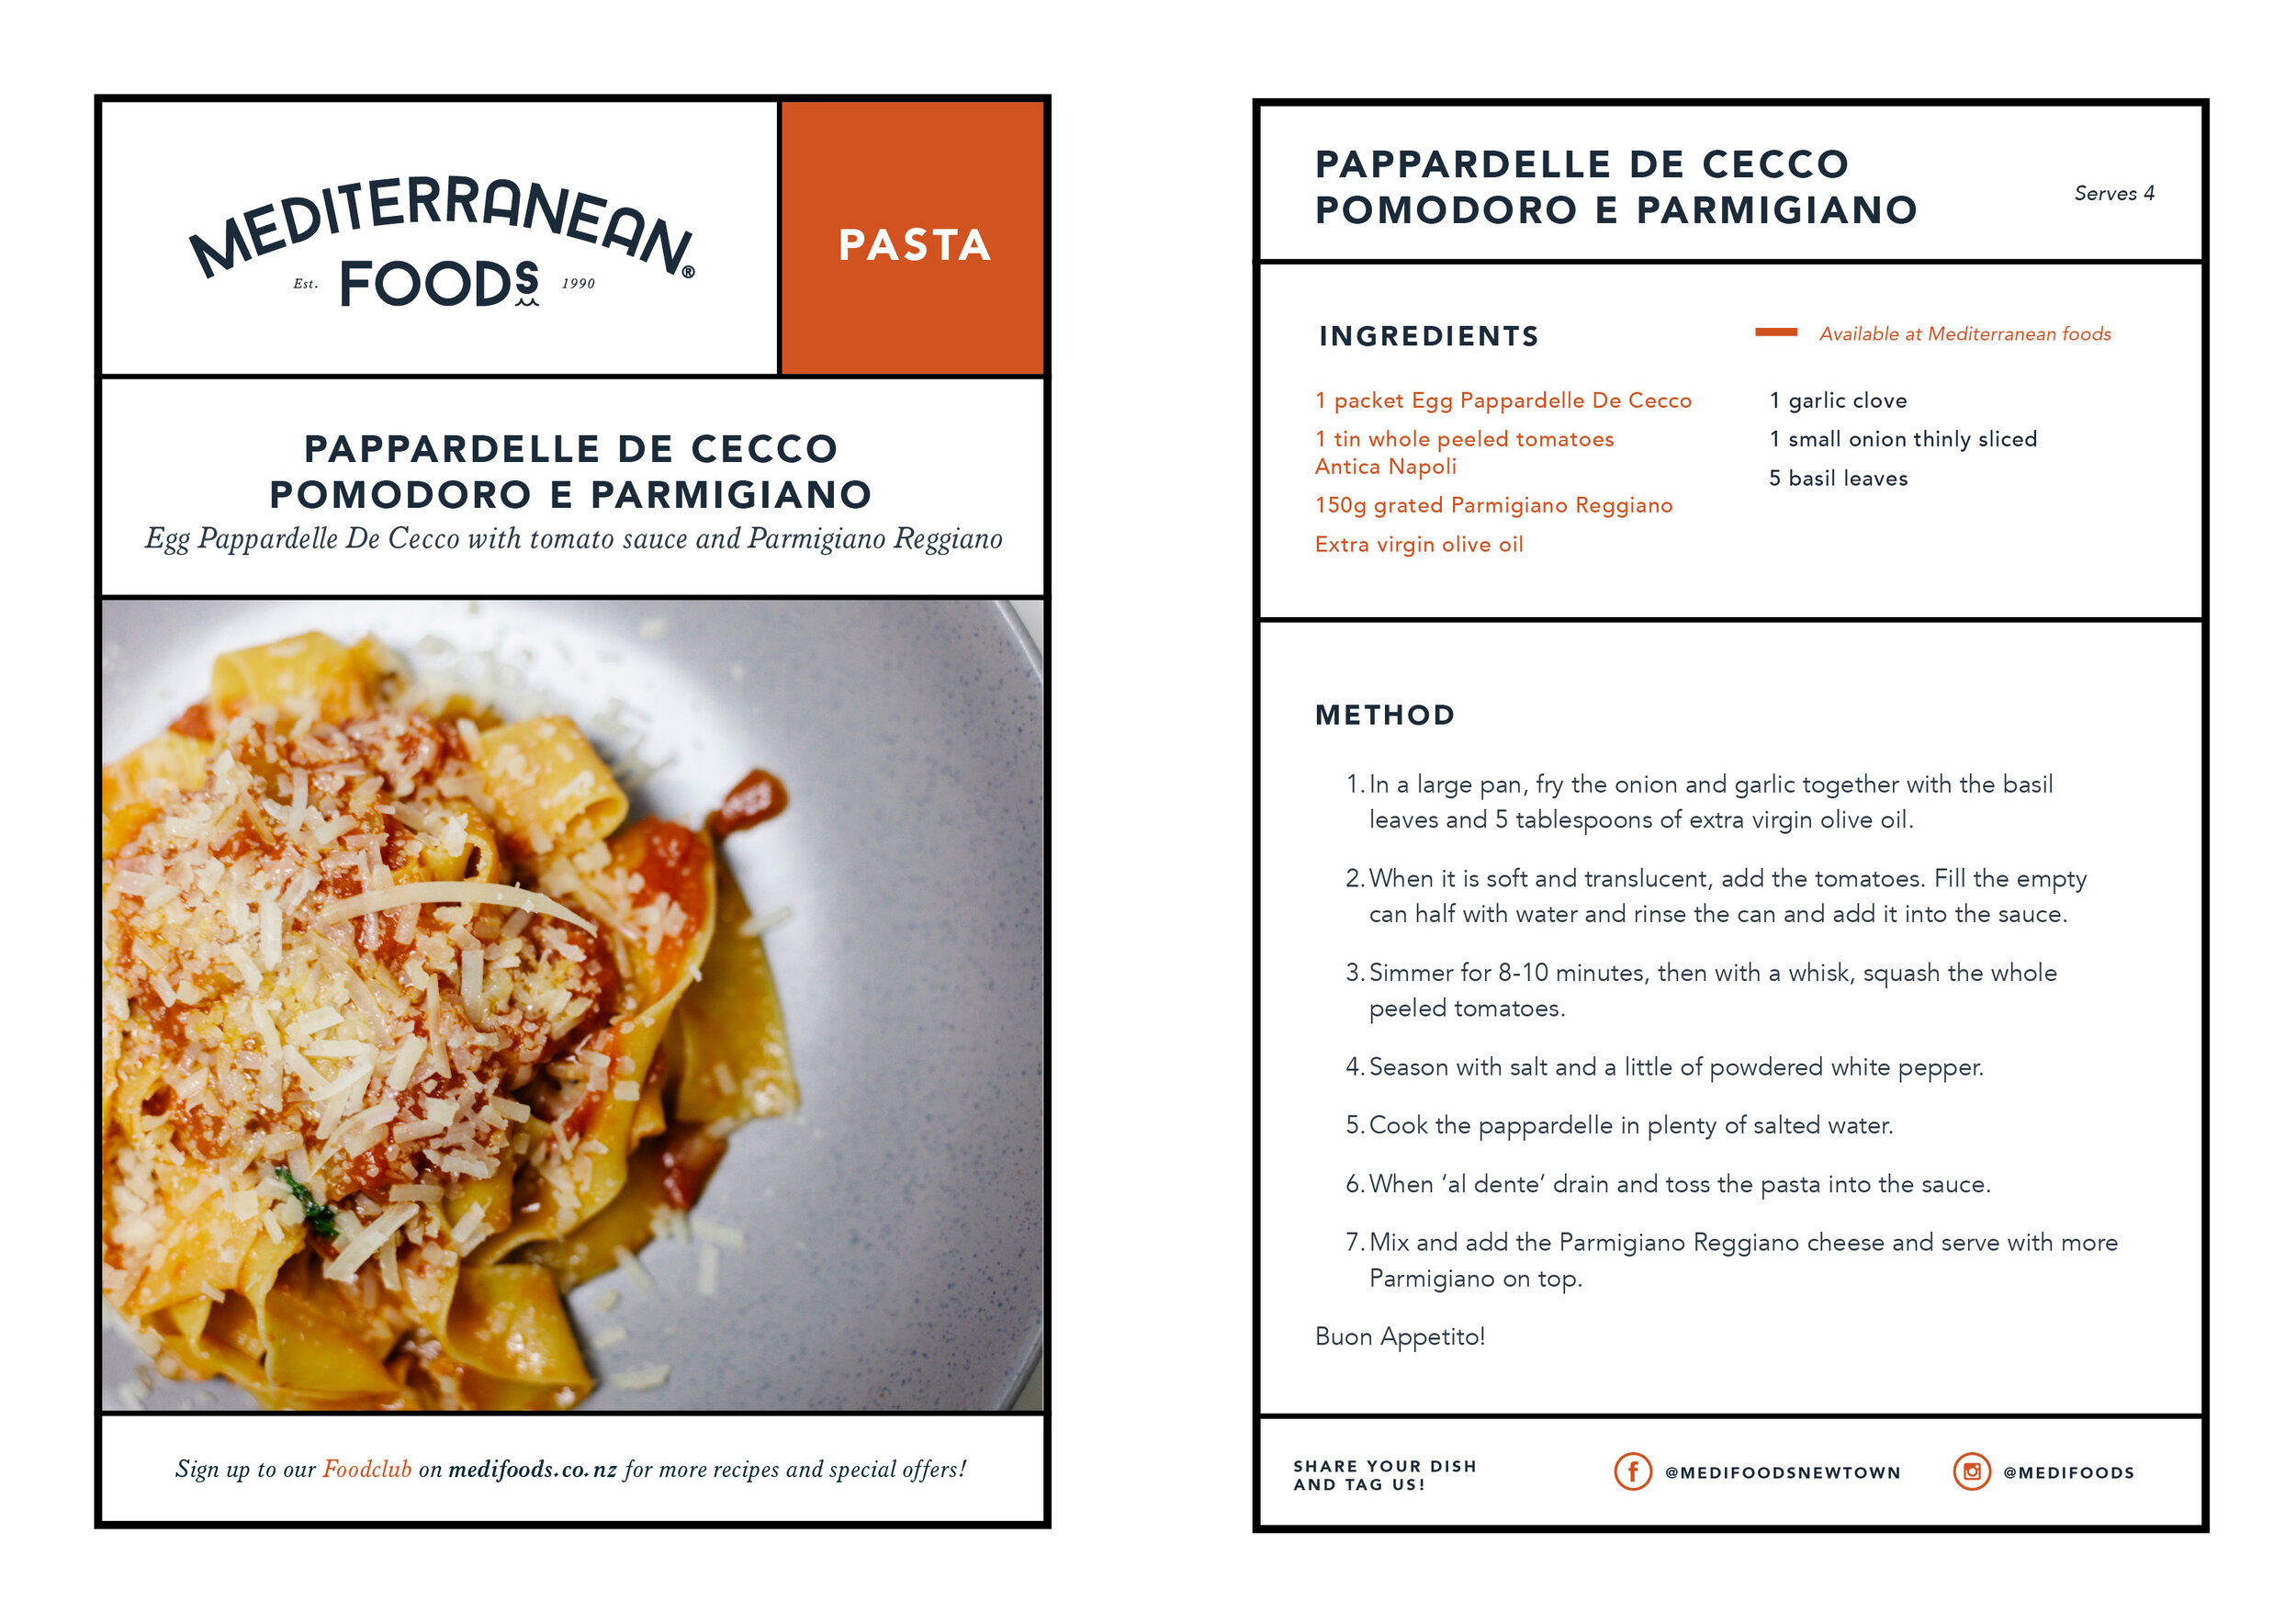 Pappardelle De Cecco Pomodoro e Parmigiano.jpg